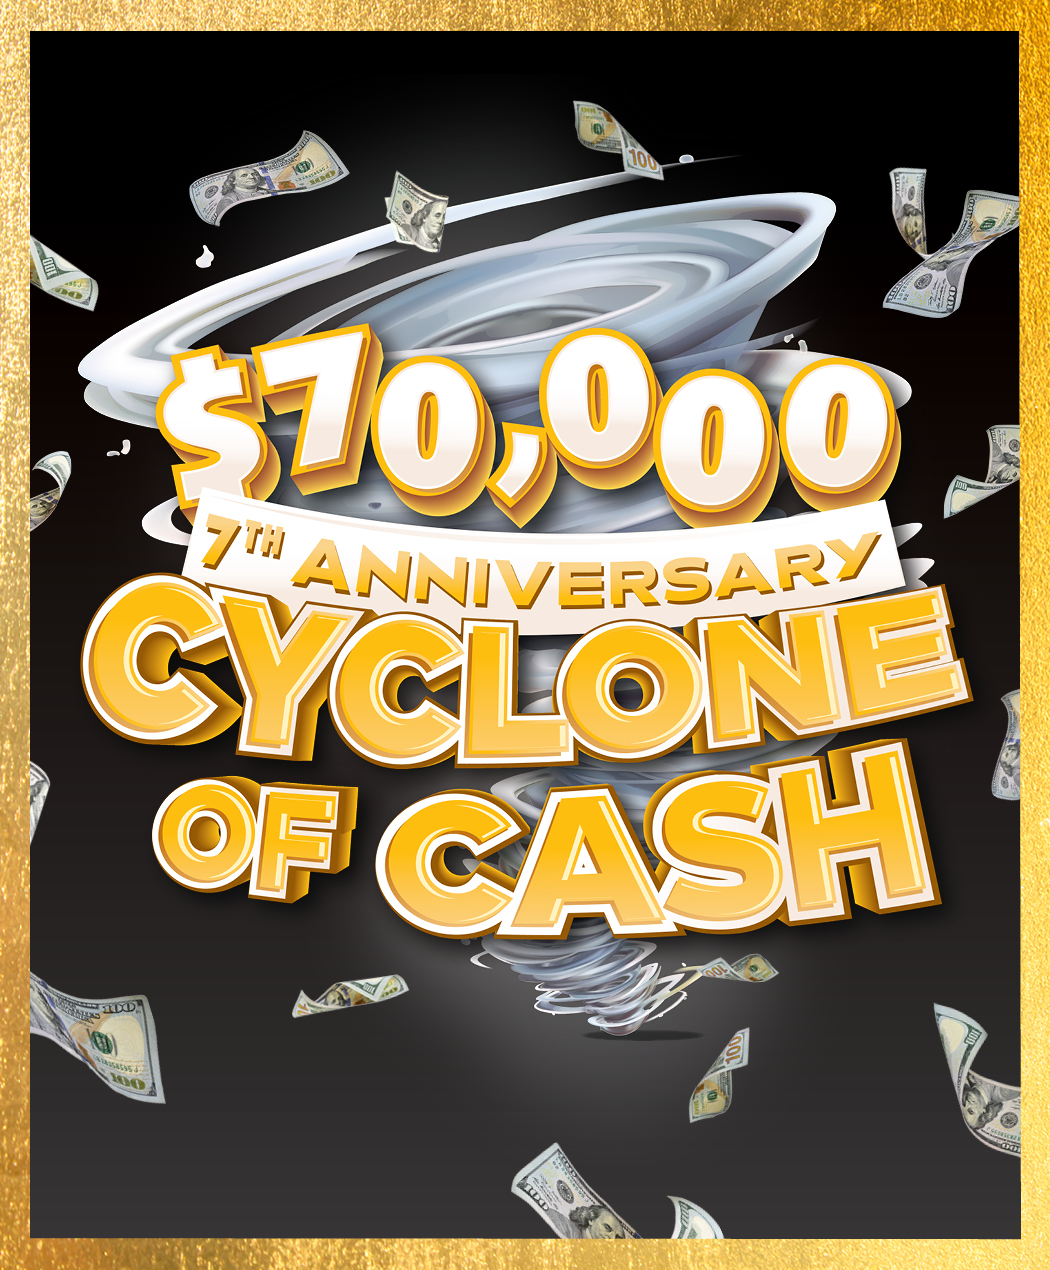 $70,000 7th Anniversary Cyclone of Cash